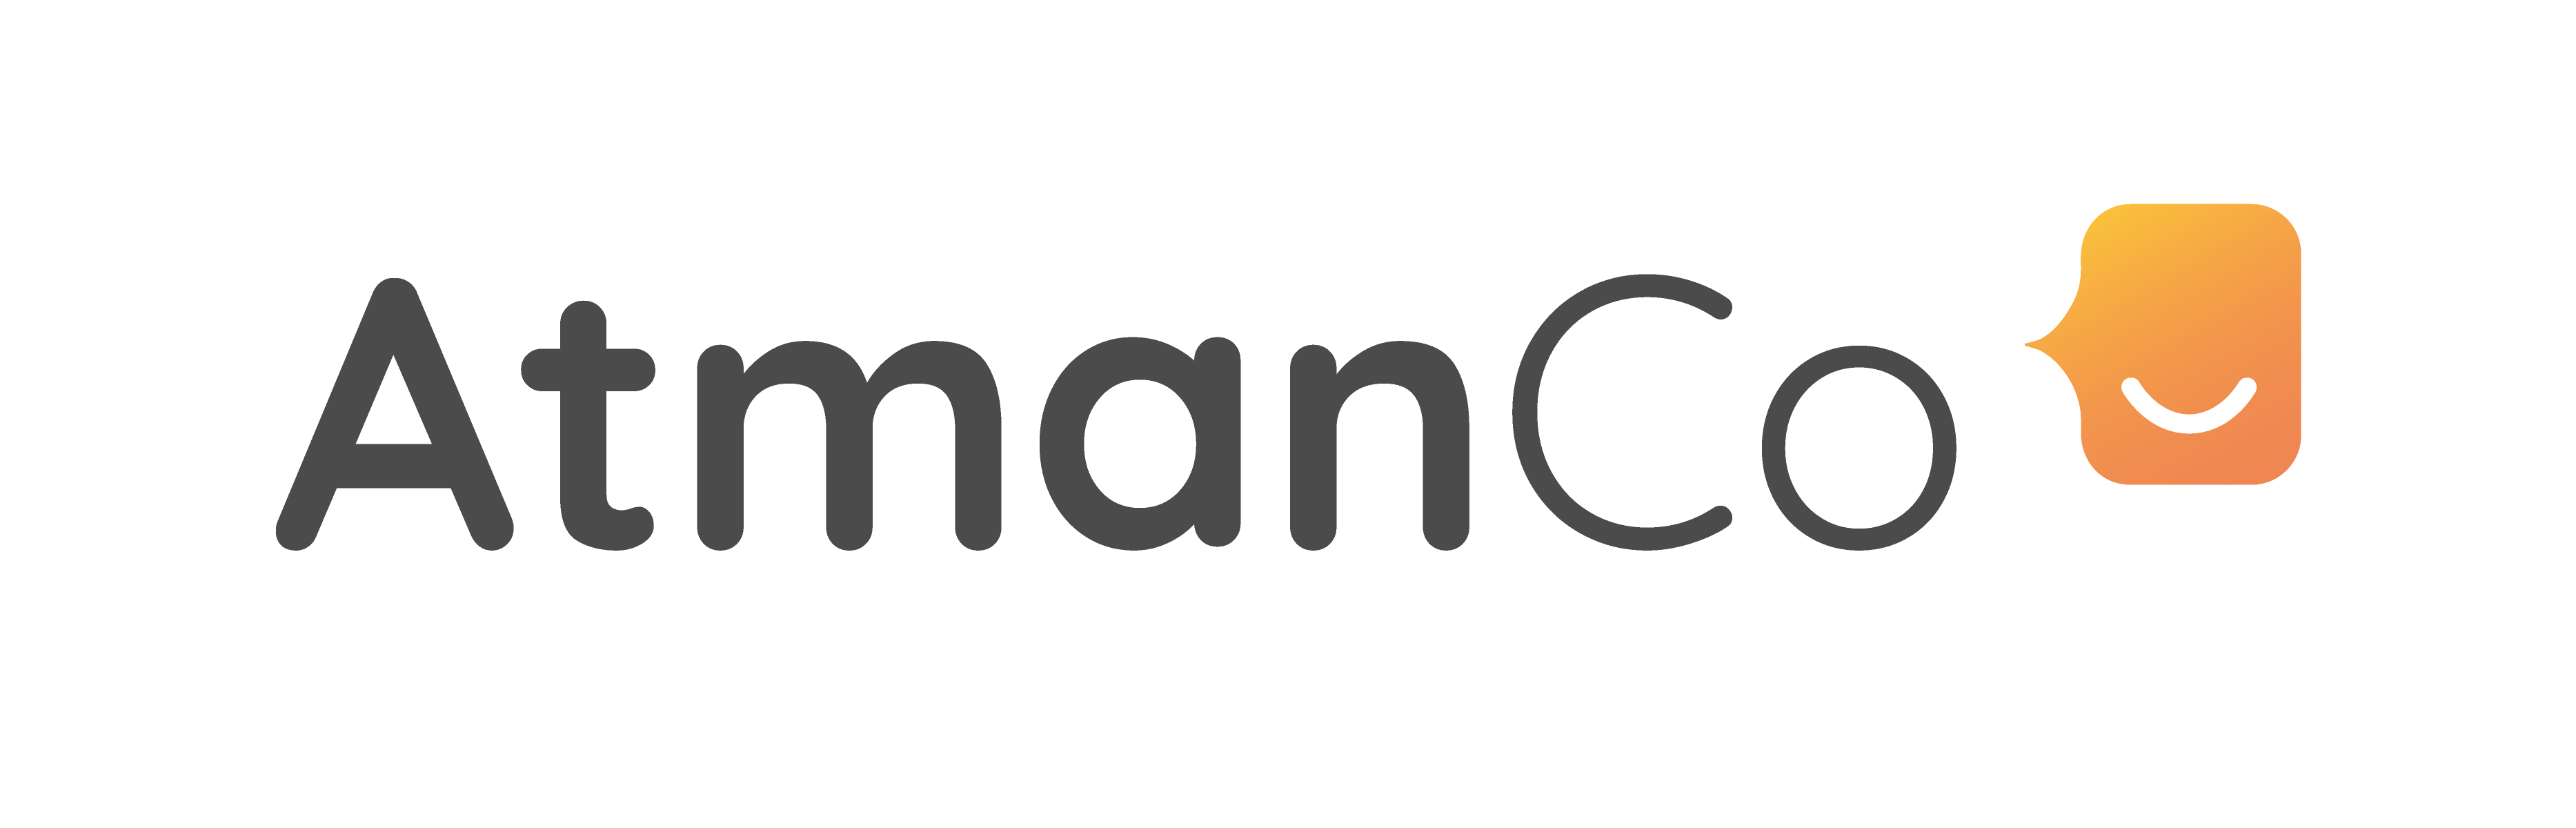 atmanco-full-logo-2x.png